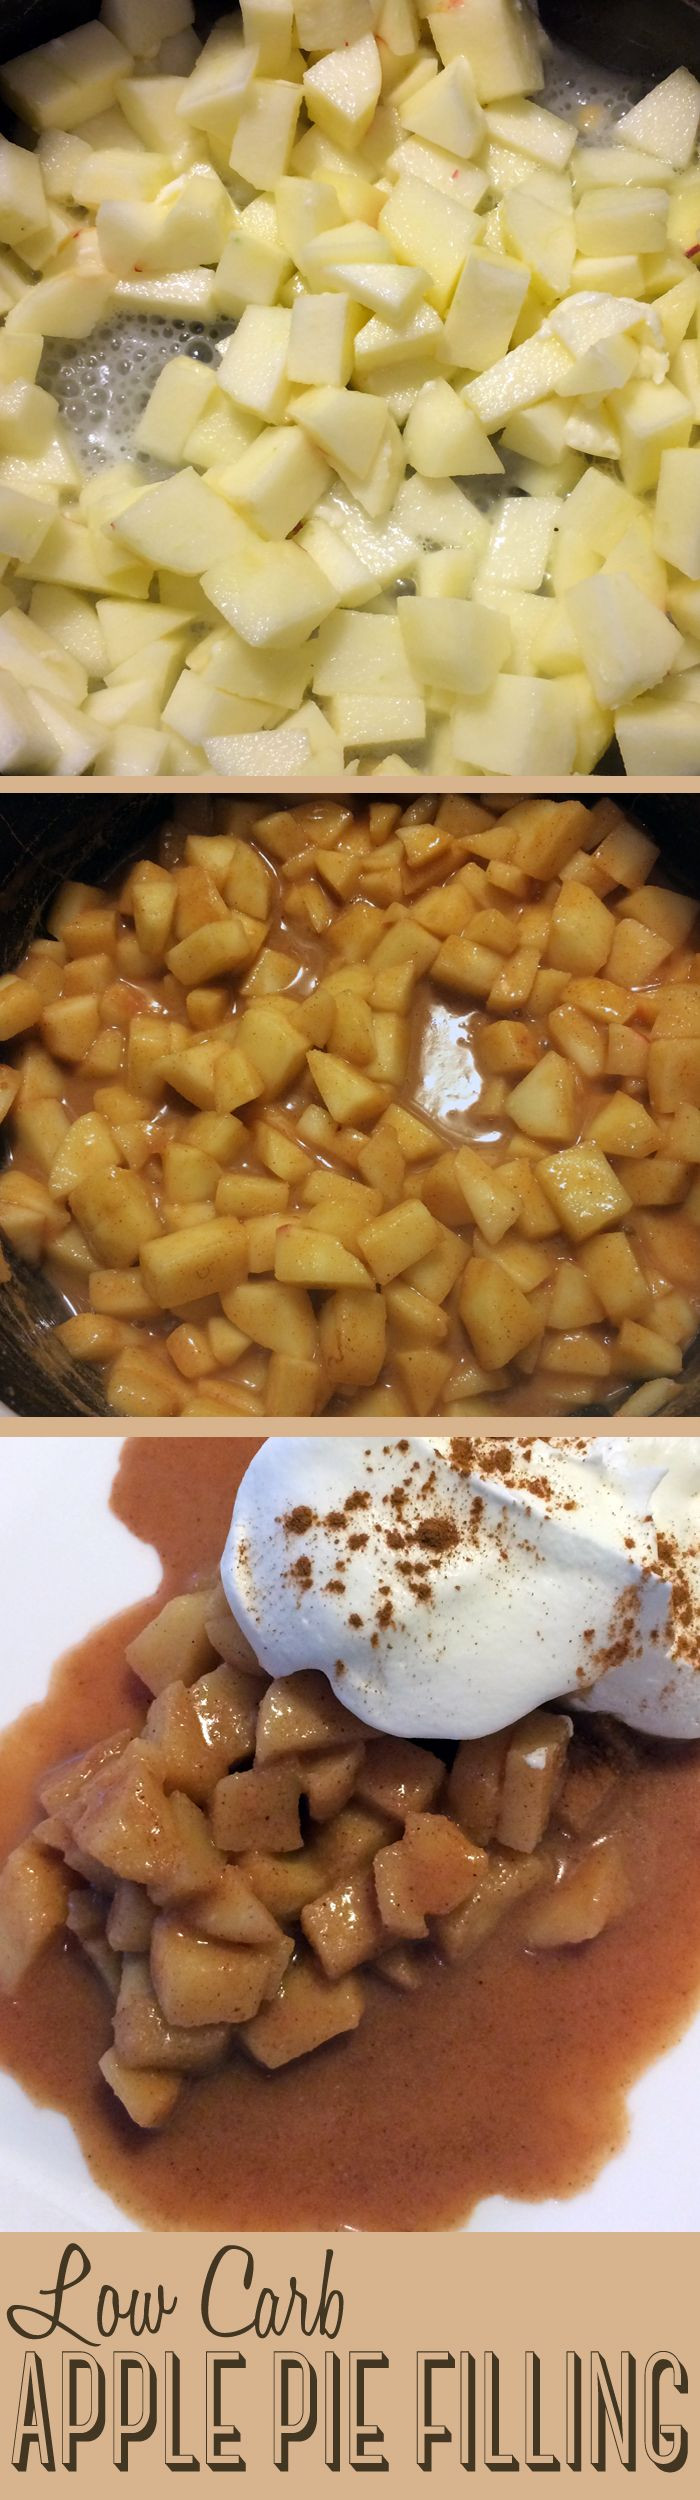 Keto Apple Pie Filling
 Low Carb Apple Pie Filling Recipe